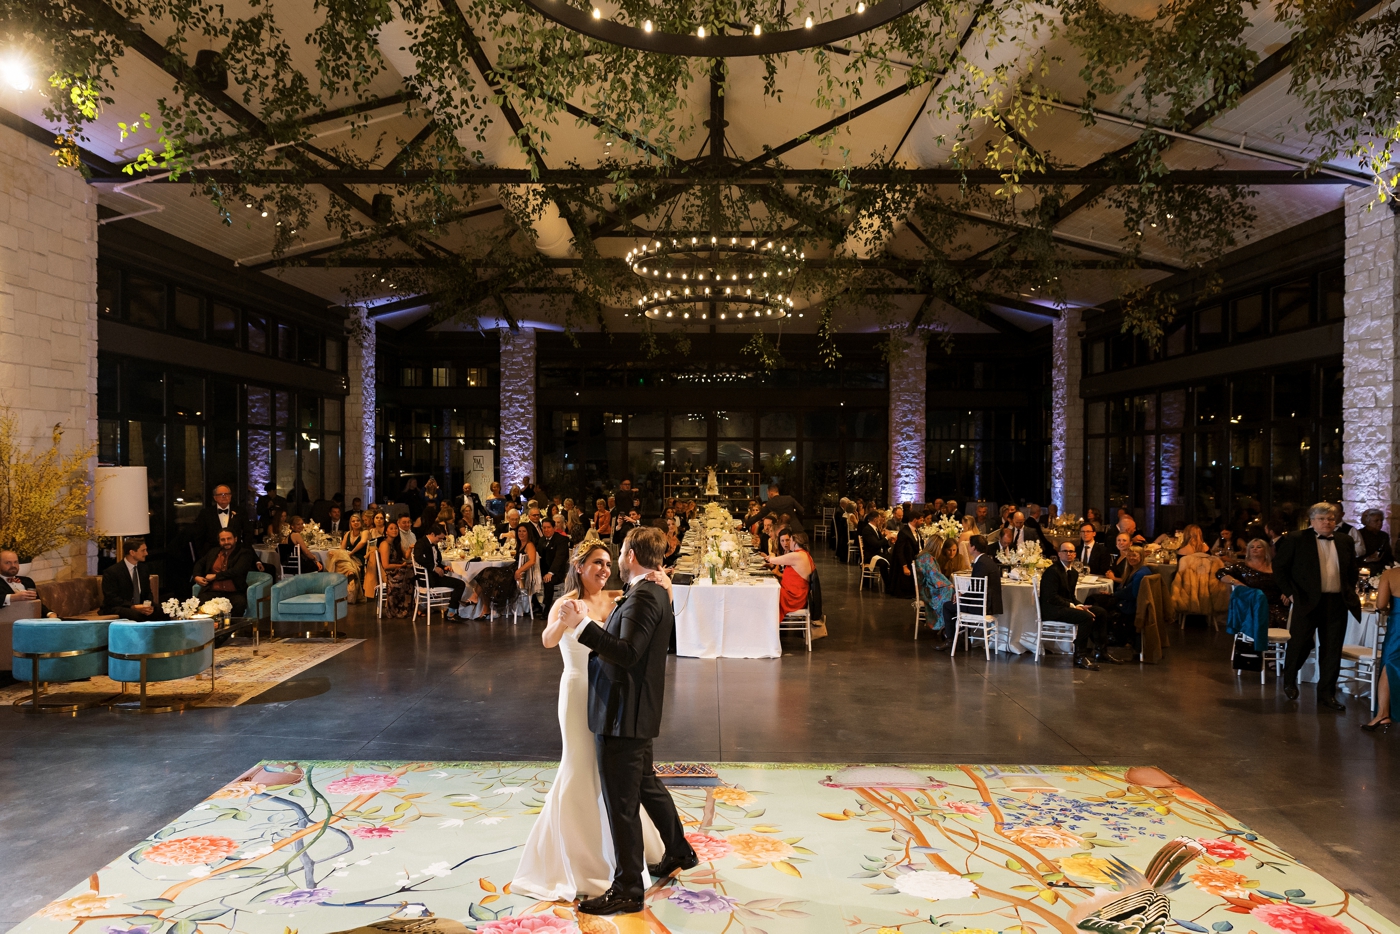 2022 wedding trends: floral pattern dance floors